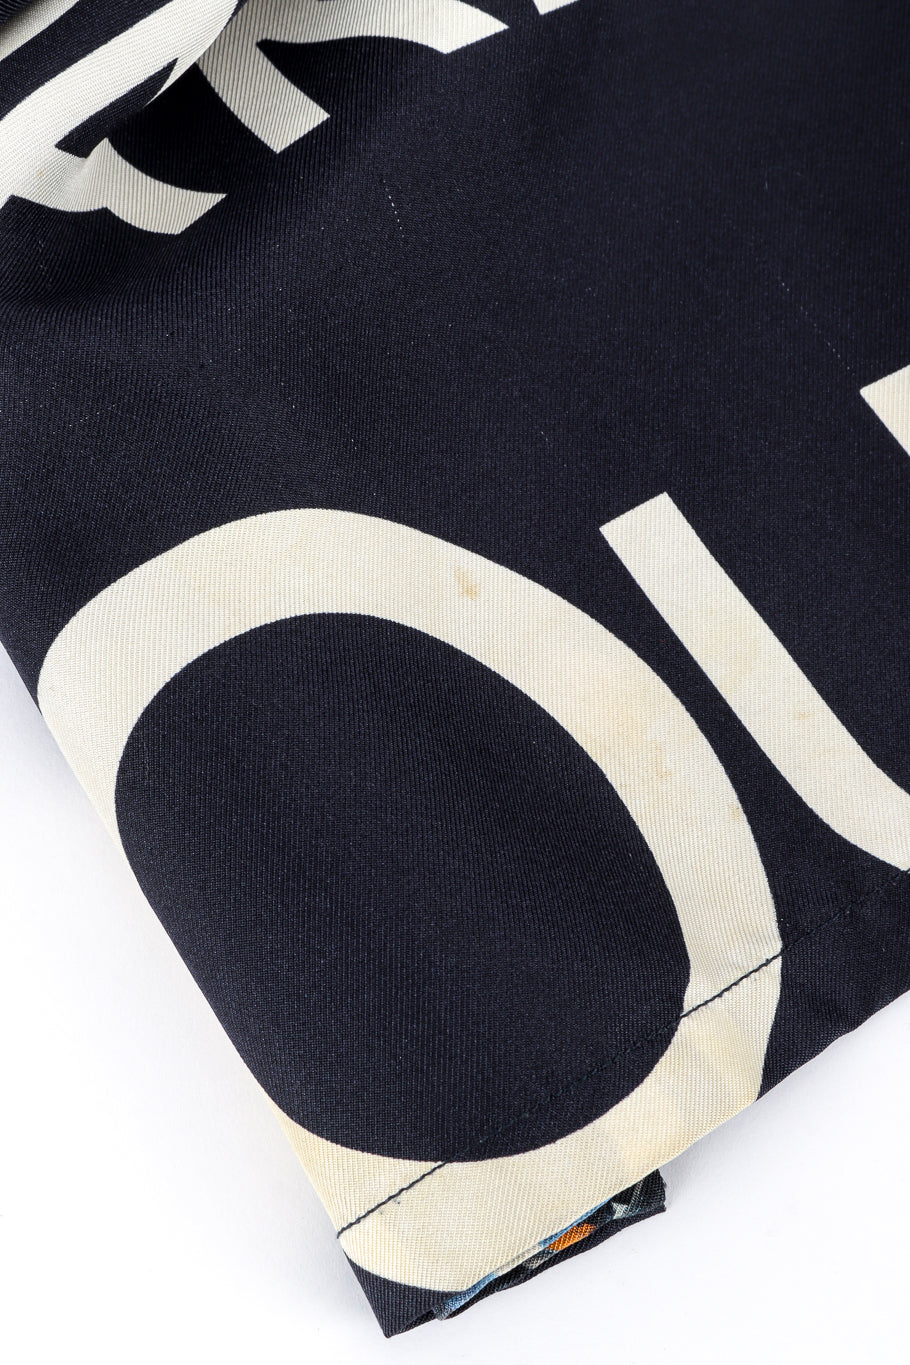 Louis Vuitton Galaxy Button Down stain on letter @recess la